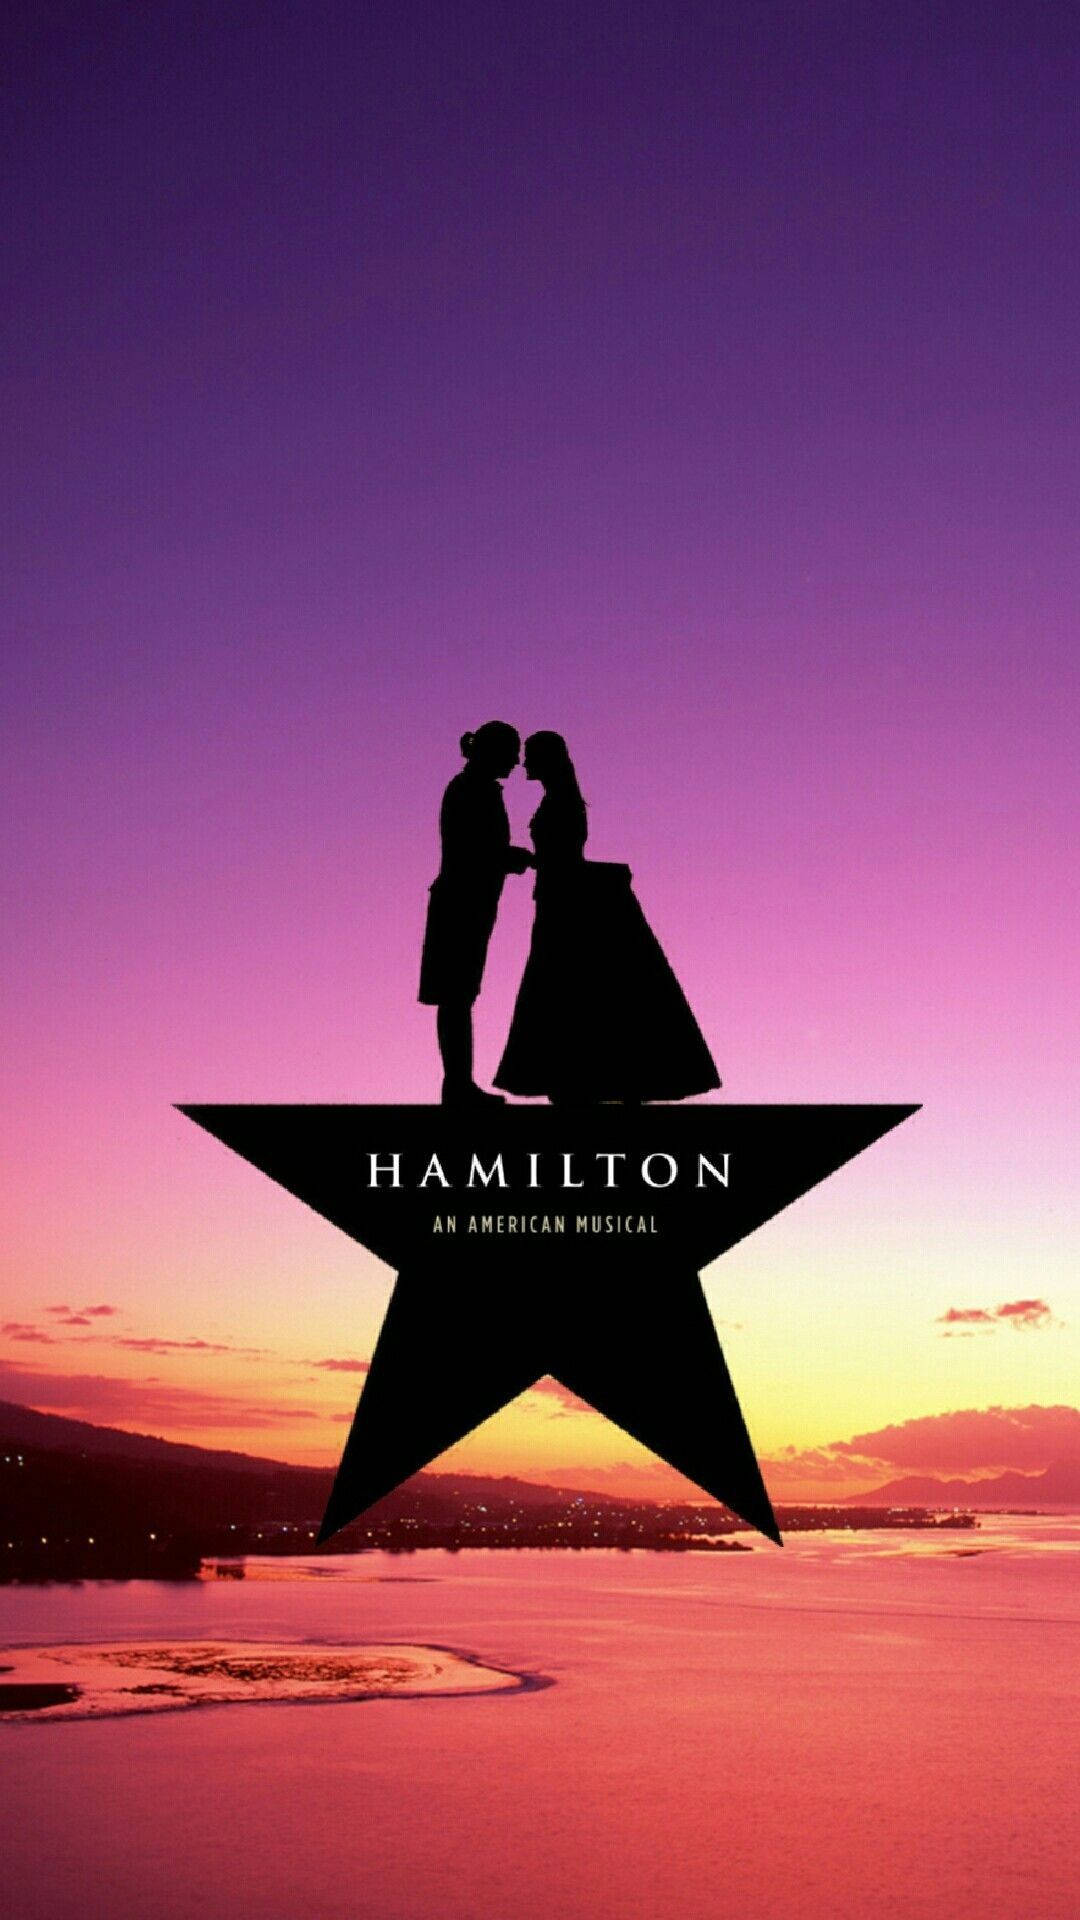 A poster for the play hamilton - Broadway, Hamilton